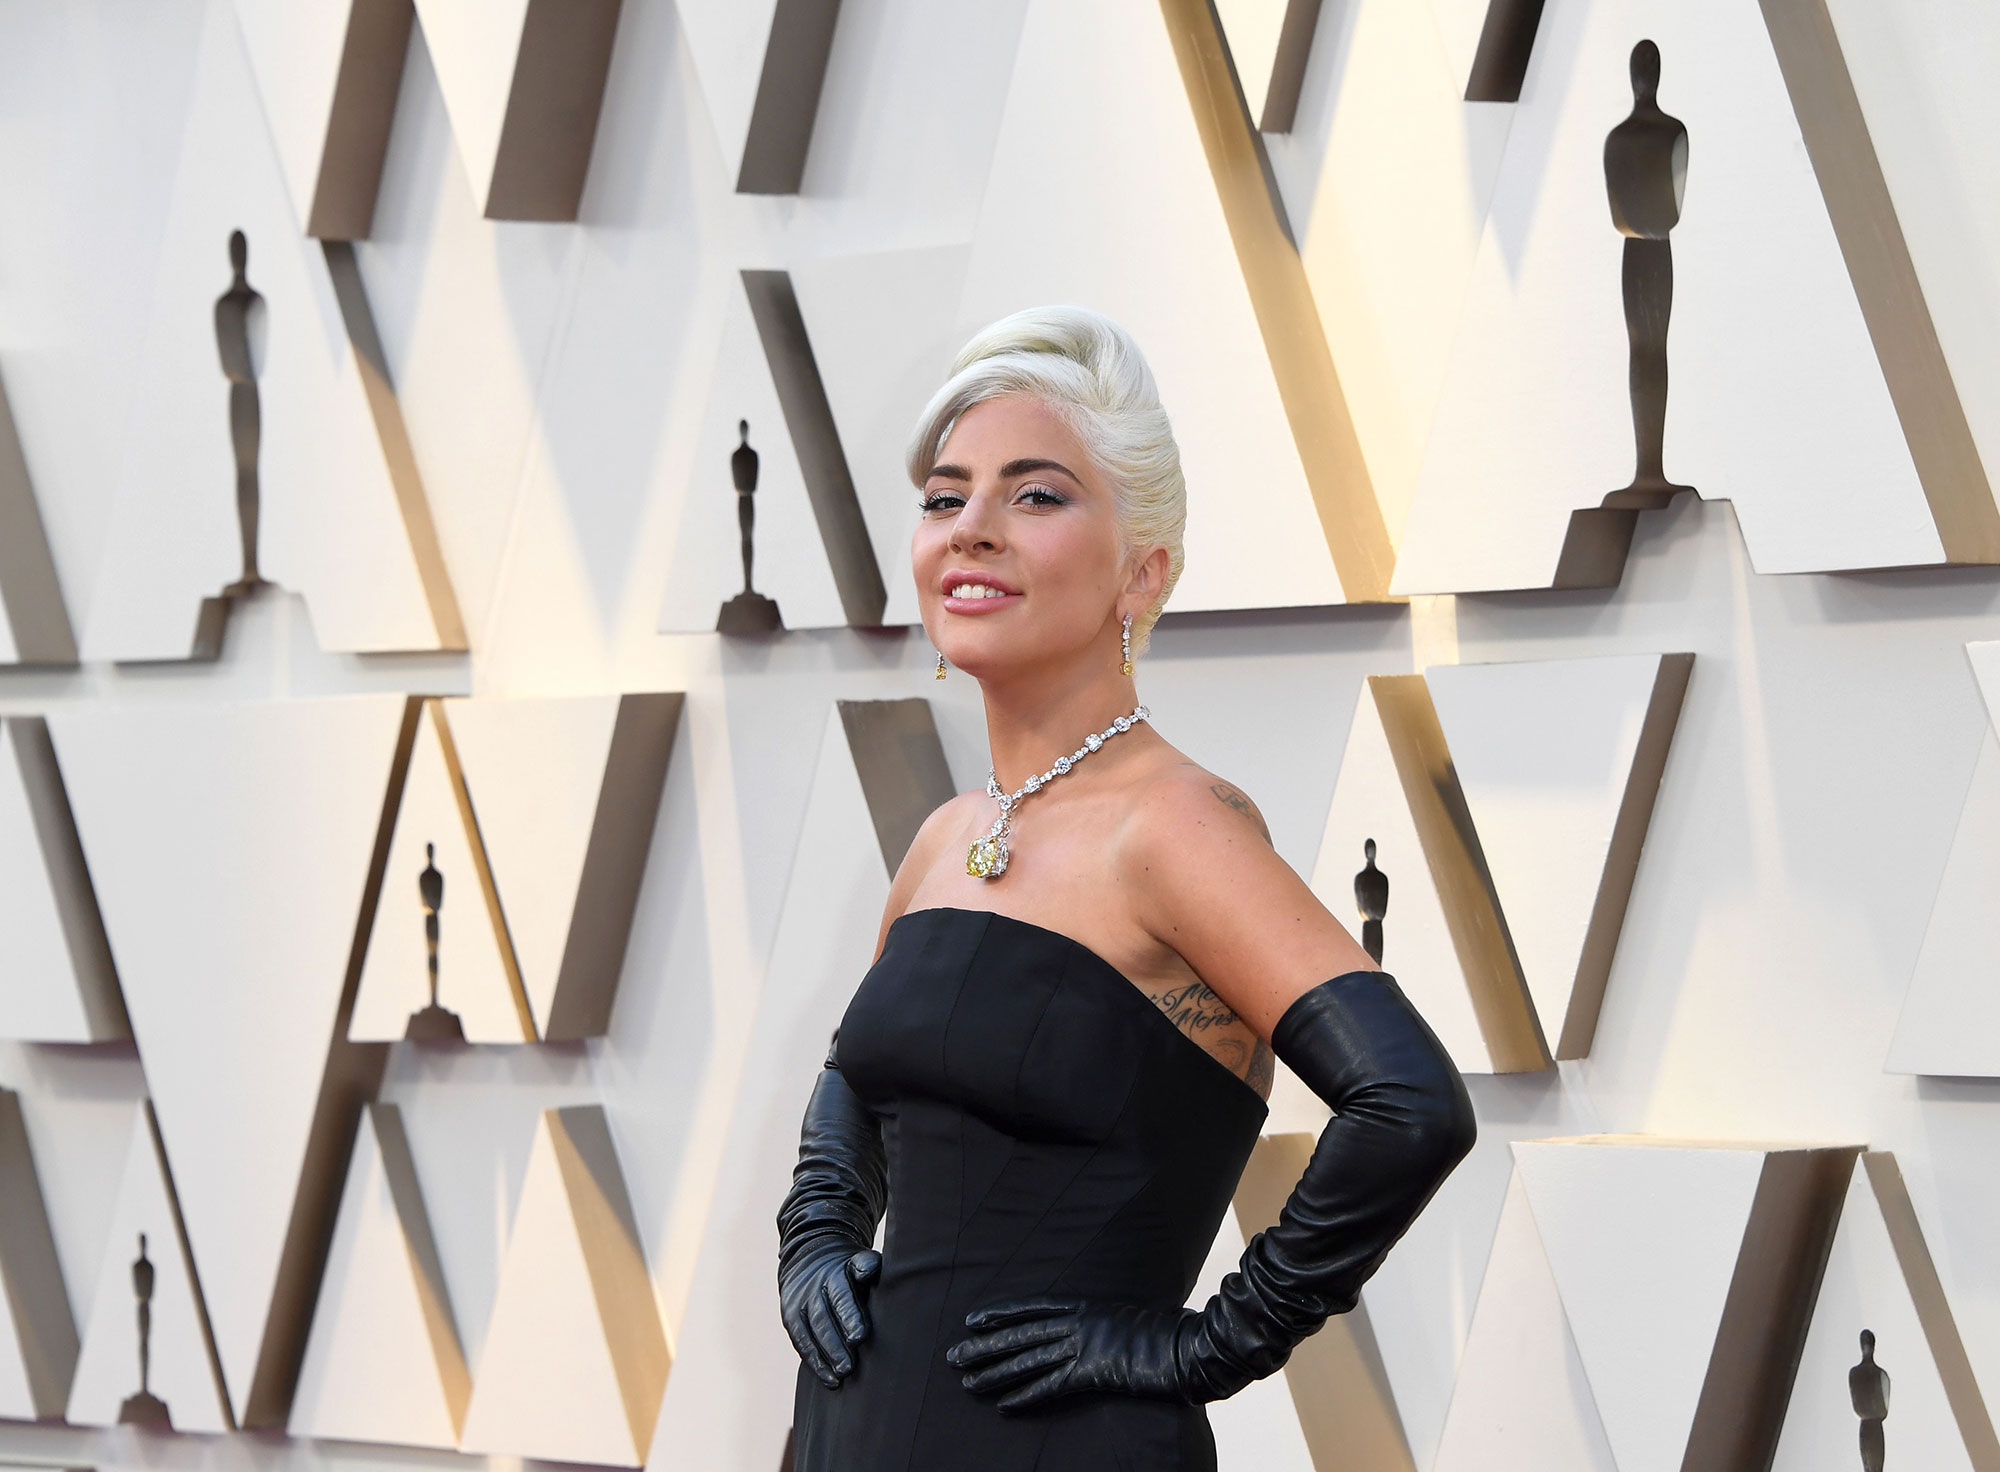 Oscars 2019: Lady Gaga's Necklace Draws 